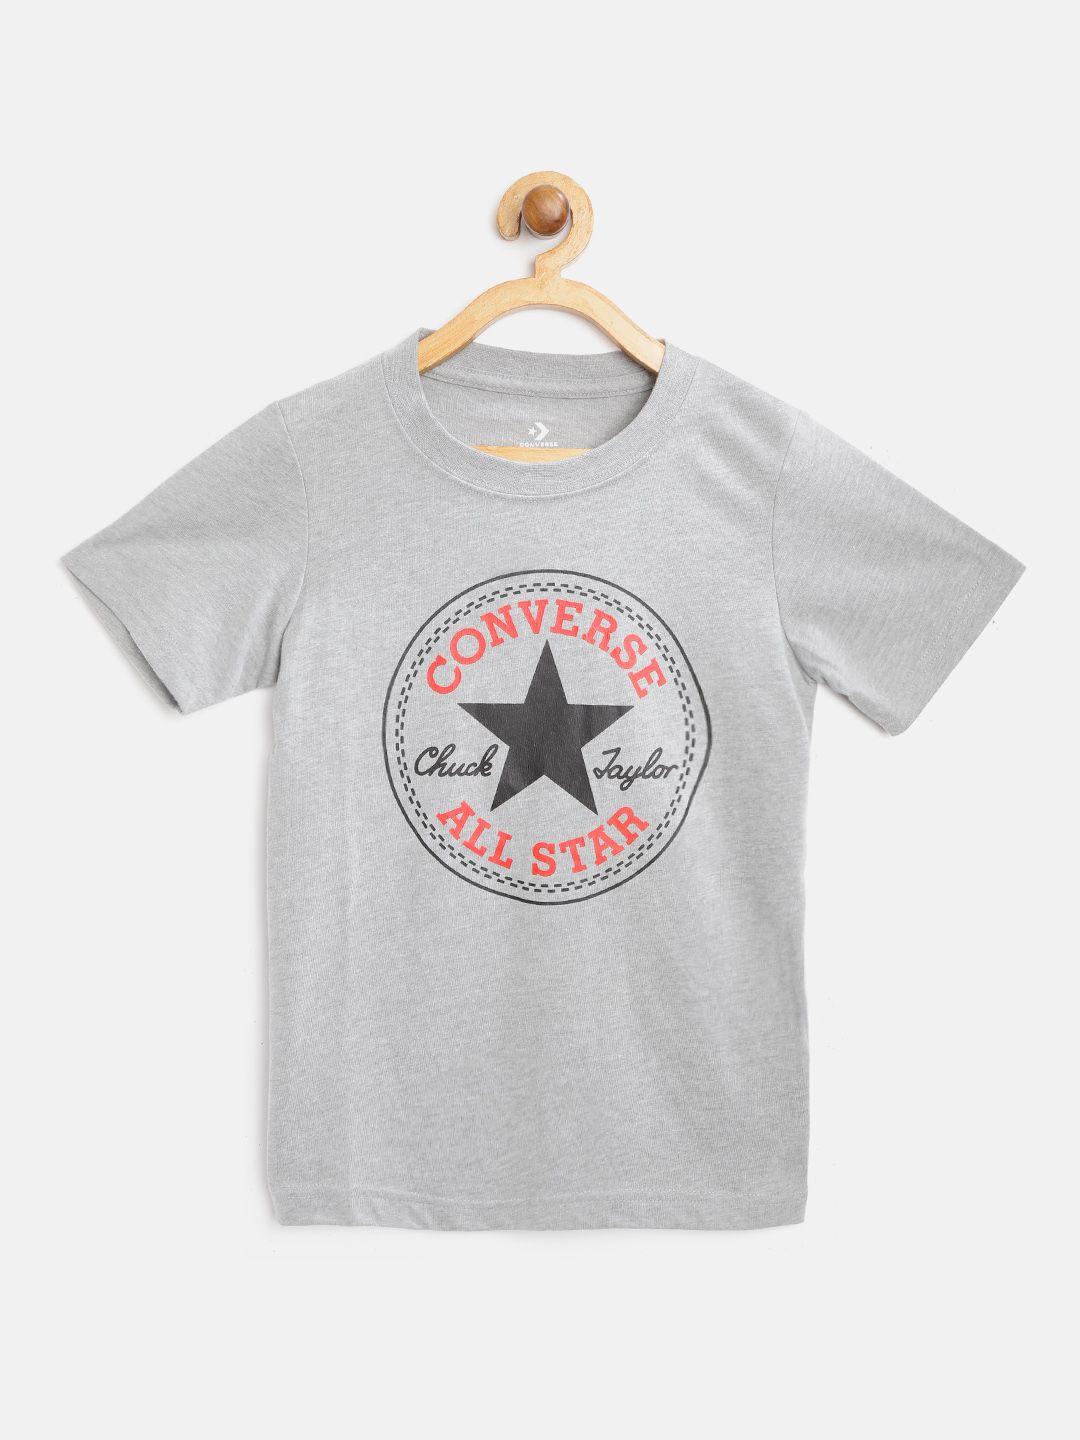 converse boys grey melange & black brand logo print pure cotton round neck t-shirt